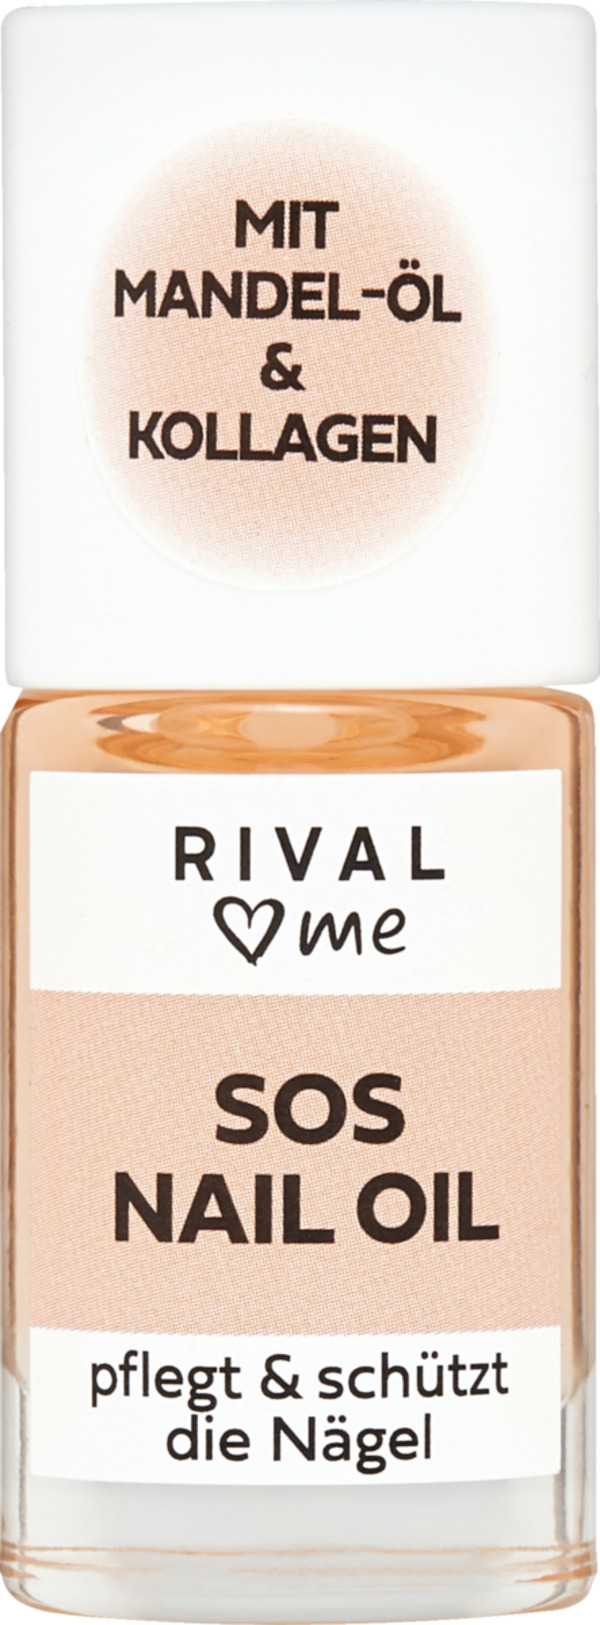 Bild 1 von RIVAL loves me Care SOS Nail Oil neu